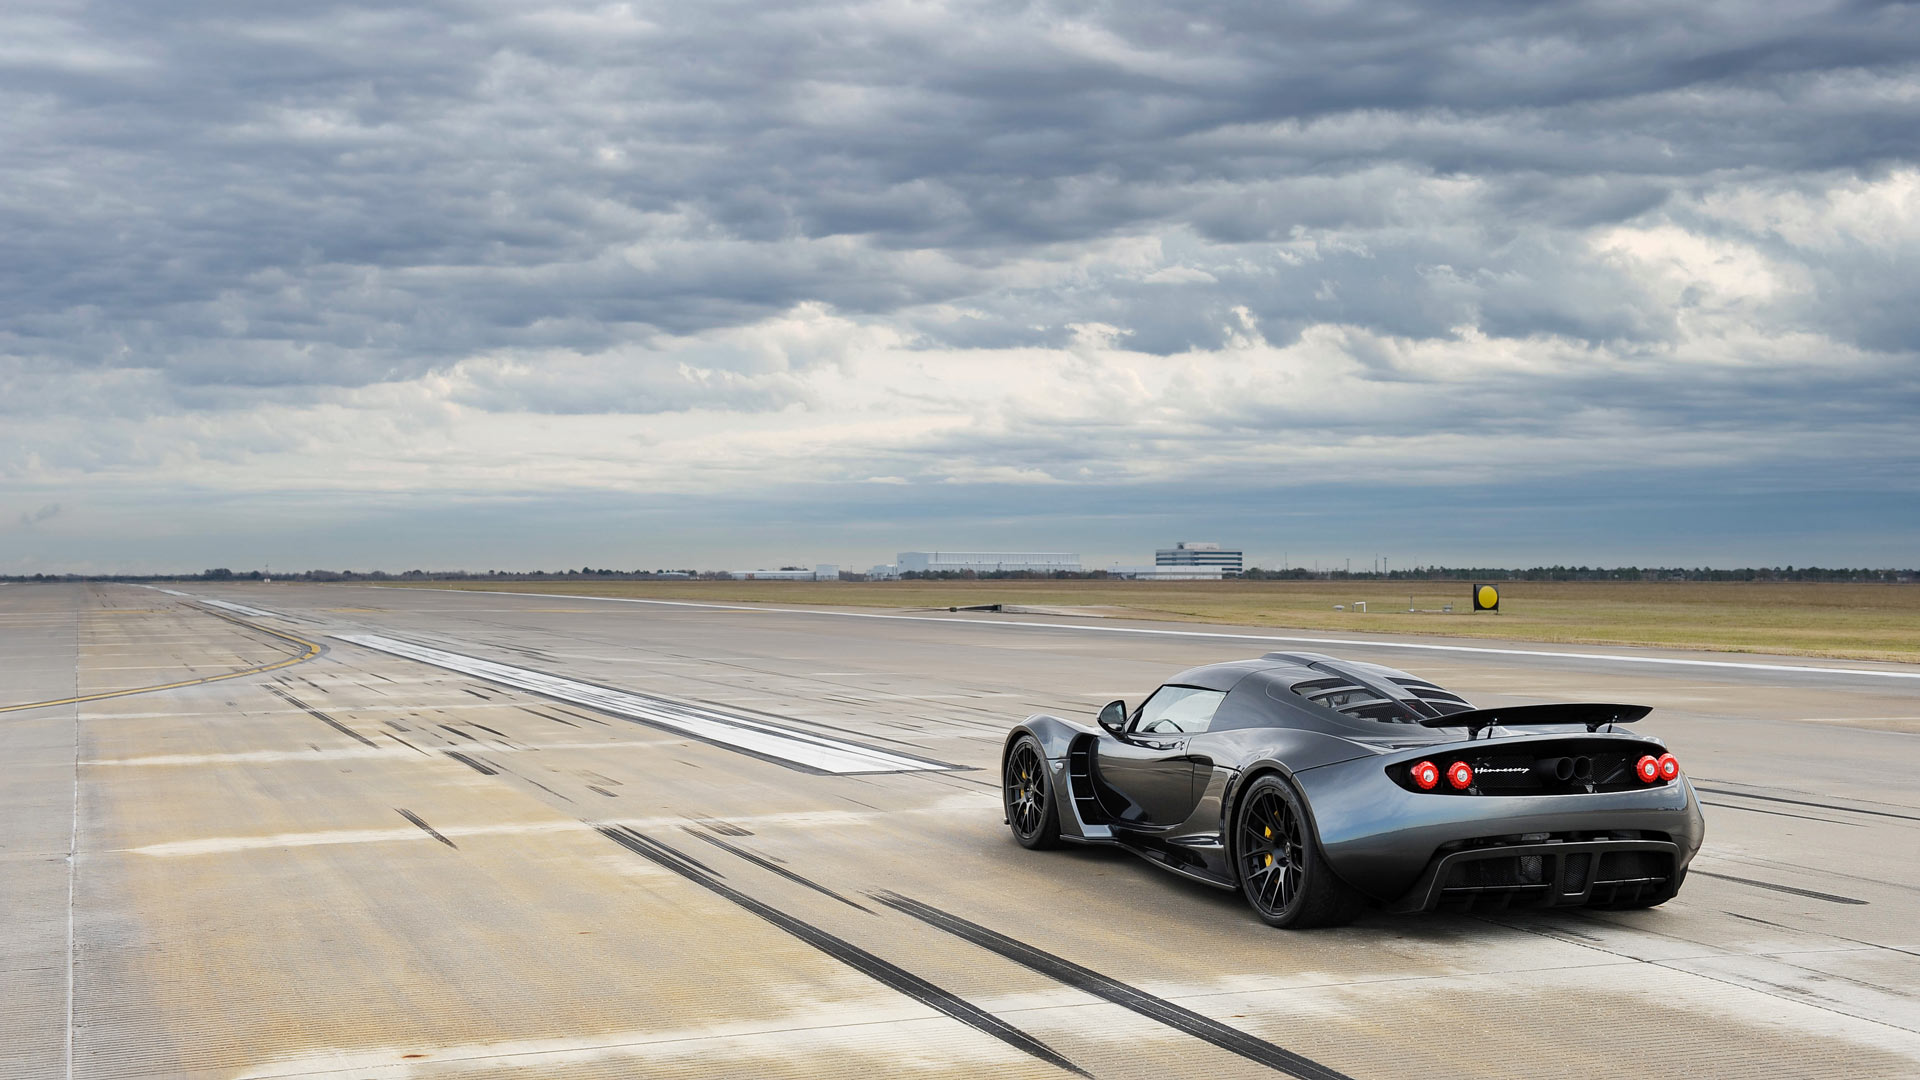 2013 Hennessey Venom GT sets new world record